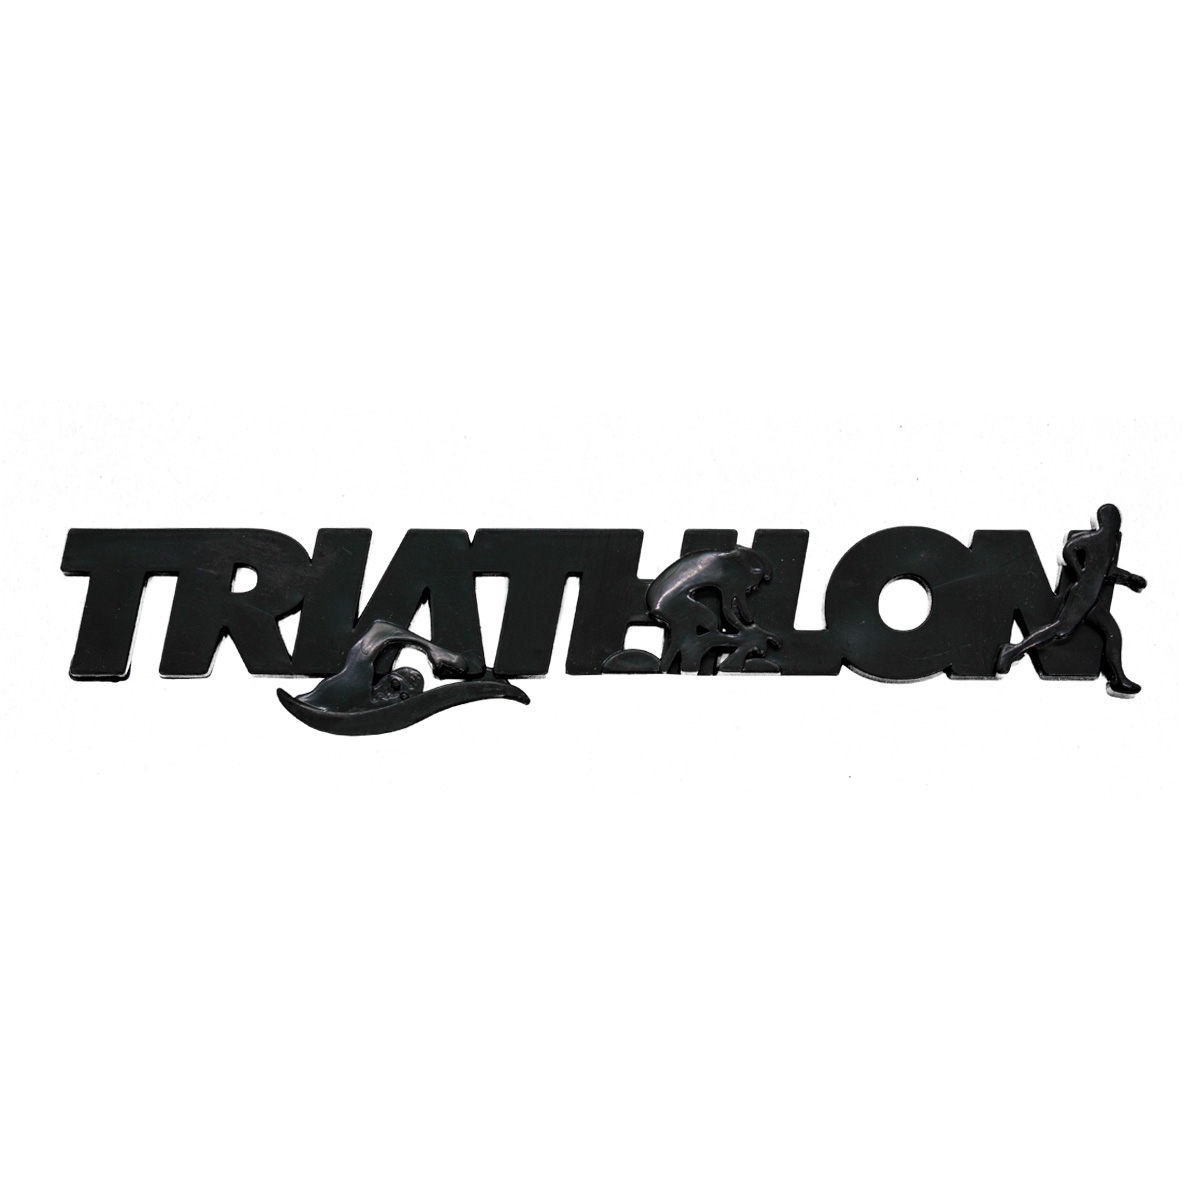 Emblema Ictus Triathlon Preto com Imã